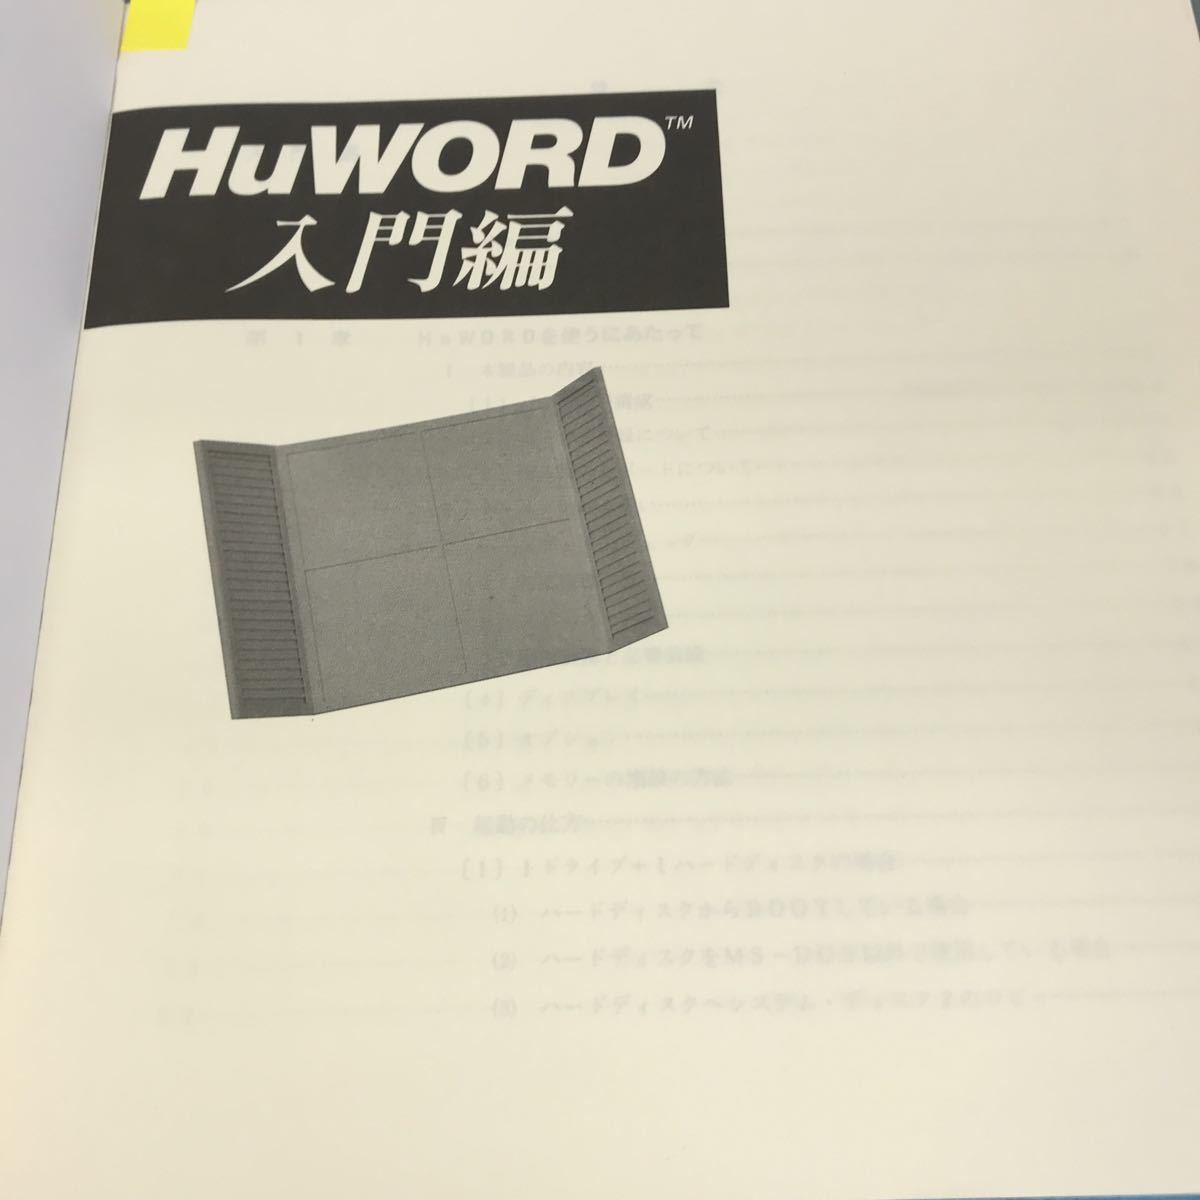 A58-086 Hu WORD 入門編 PC-9801F/mシリーズ 株式会社ハドソン_画像4